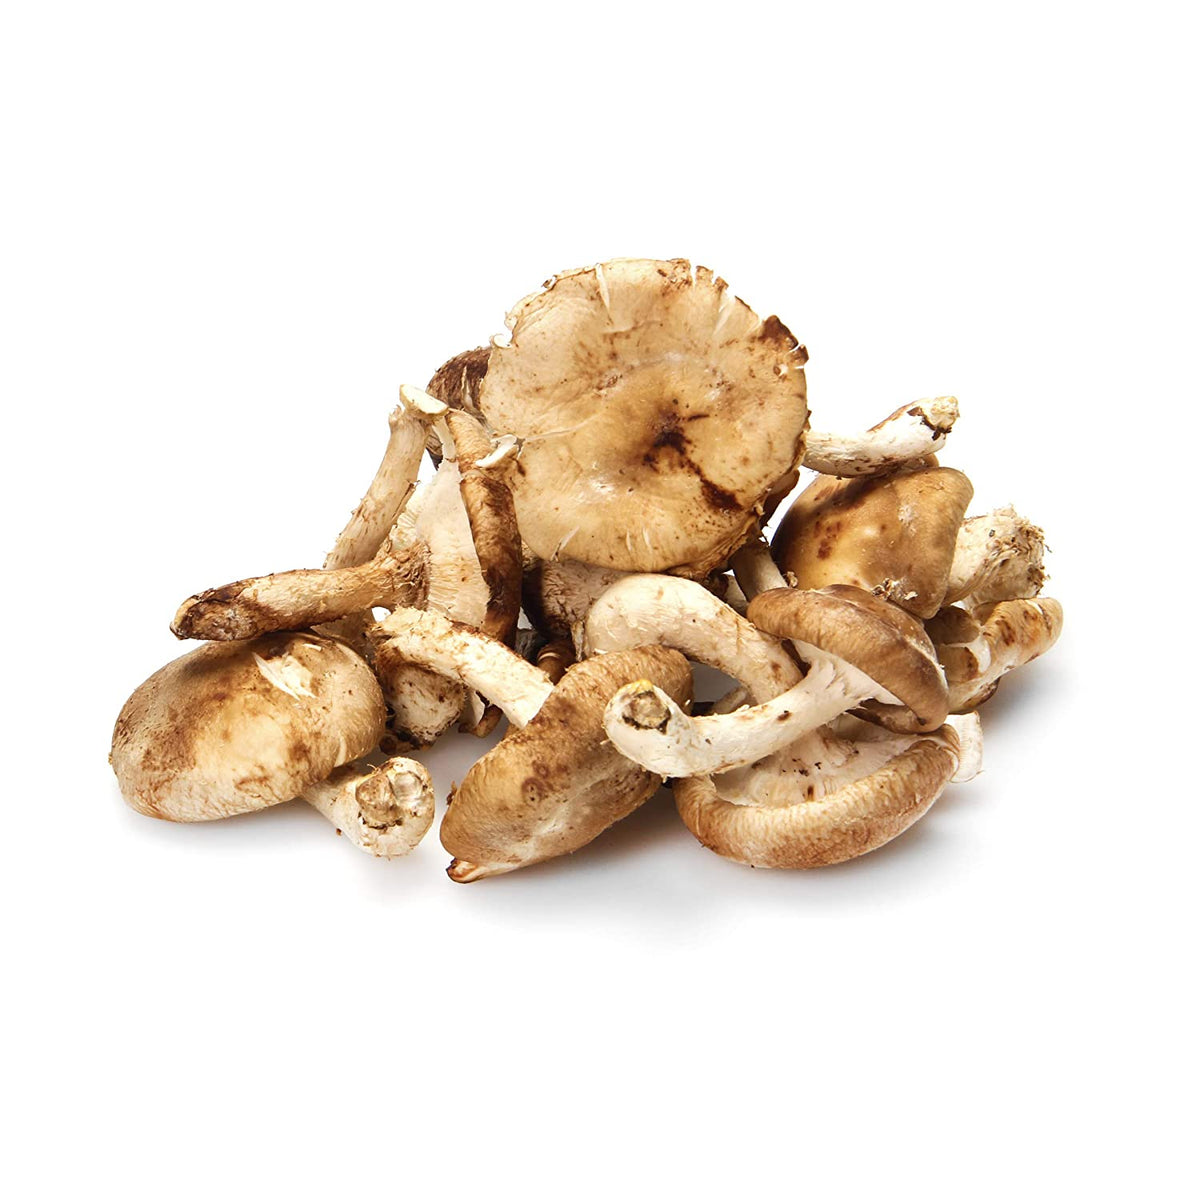 PC Organics Organics Whole Shitake Mushrooms